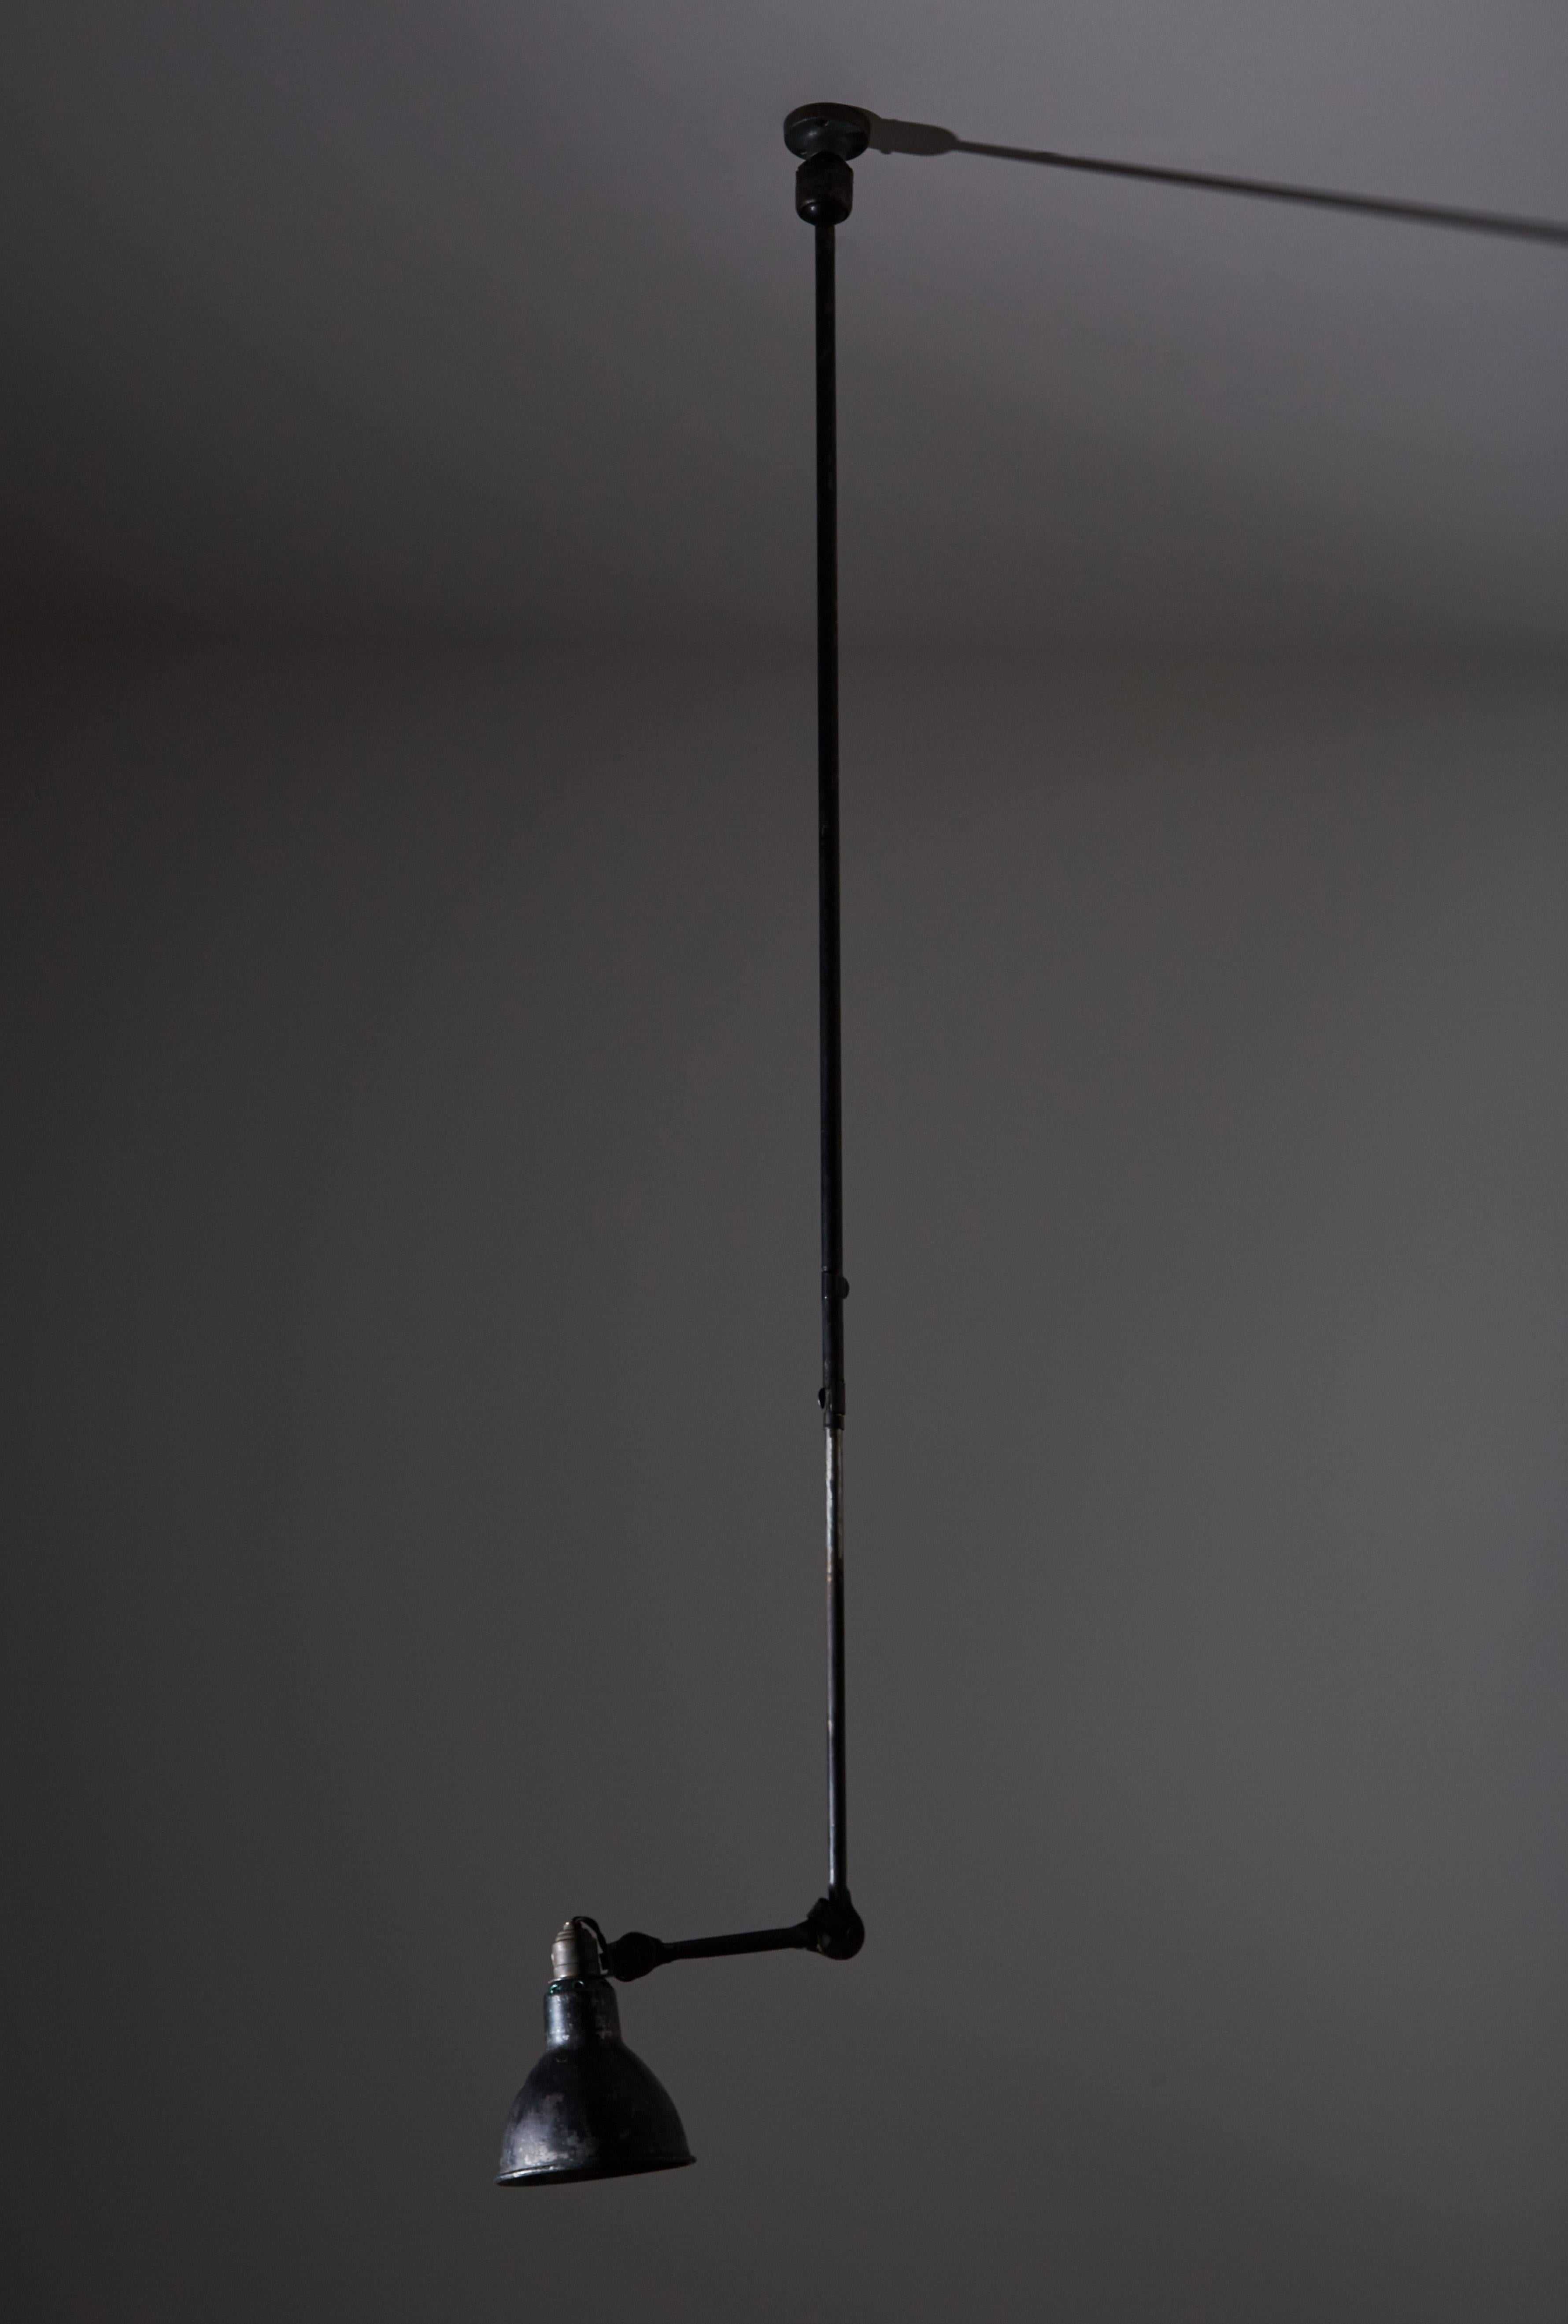 Industrial Model No. 302 Adjustable Ceiling Light by Gras Ravel